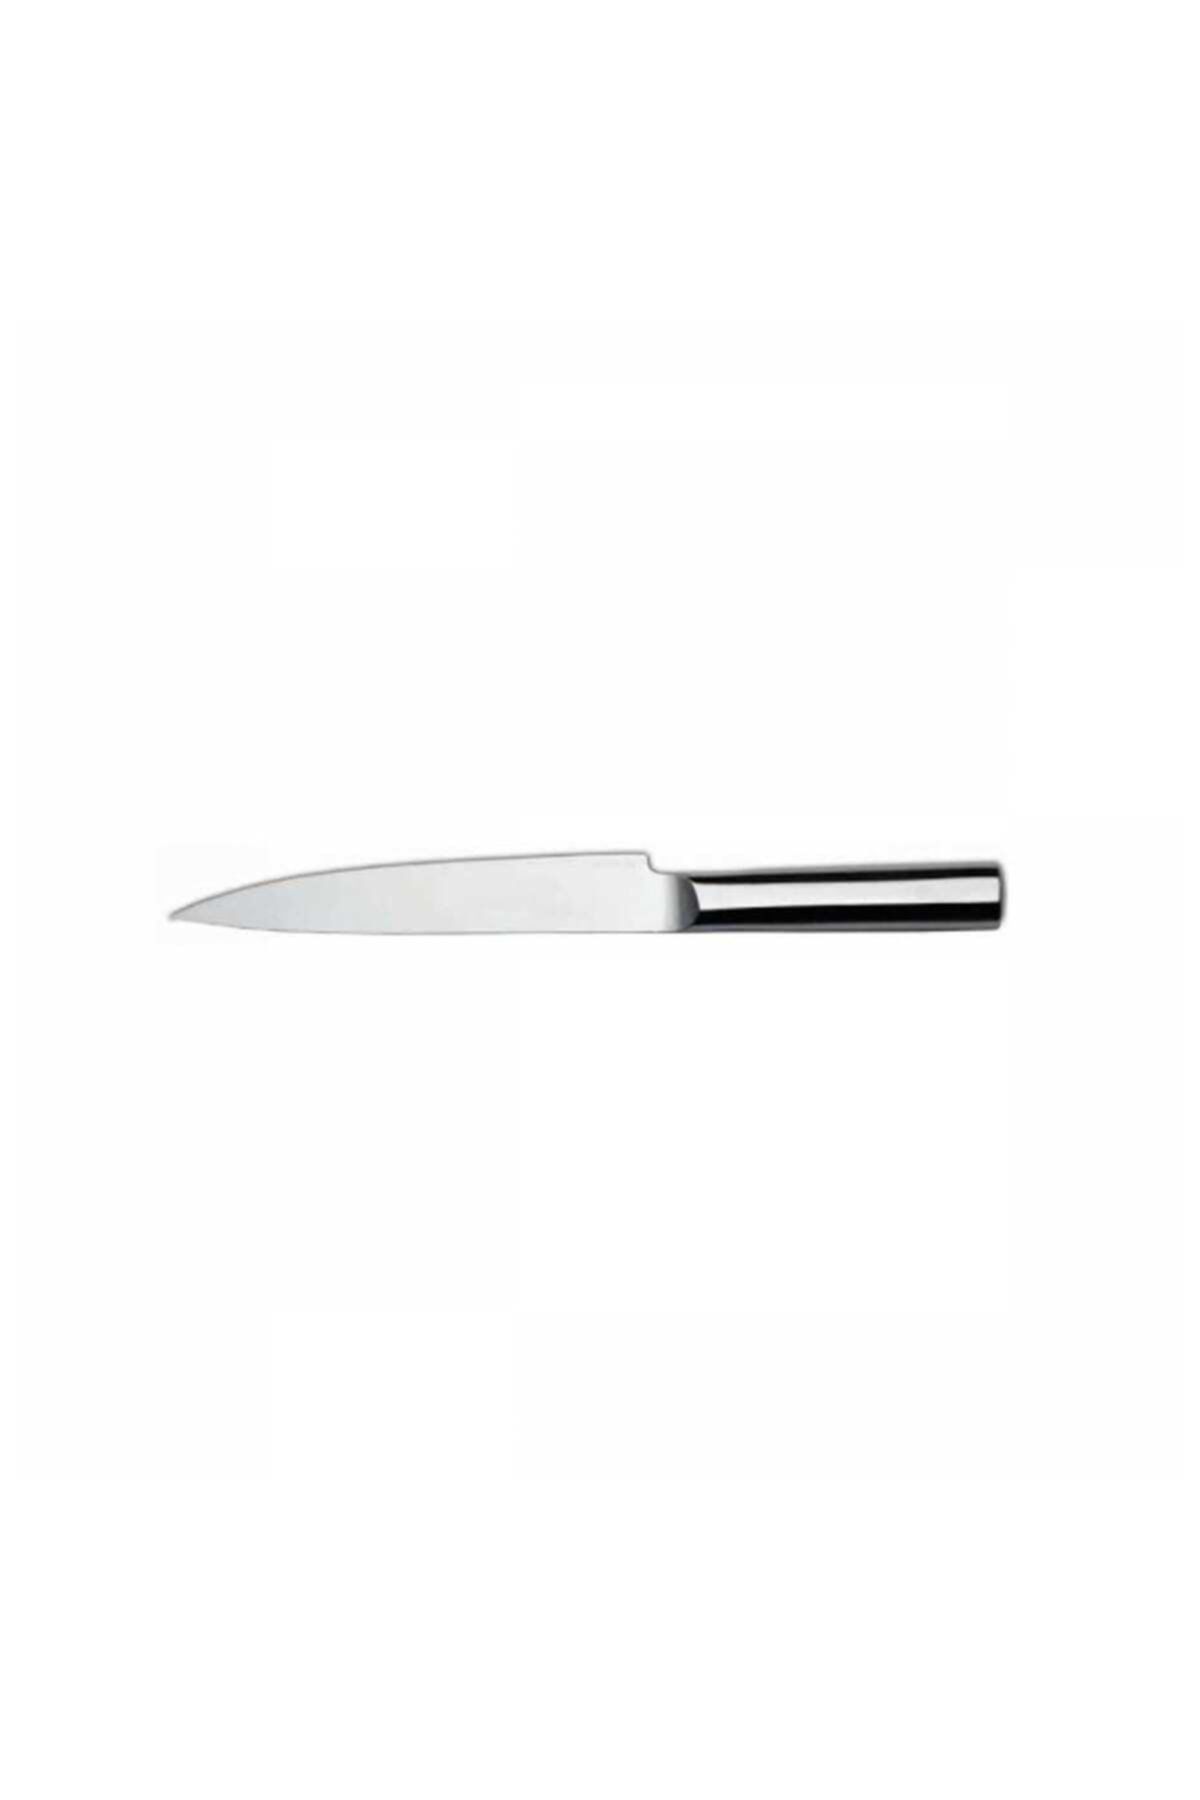 KORKMAZ Dilimleme Bıçağı A501-04